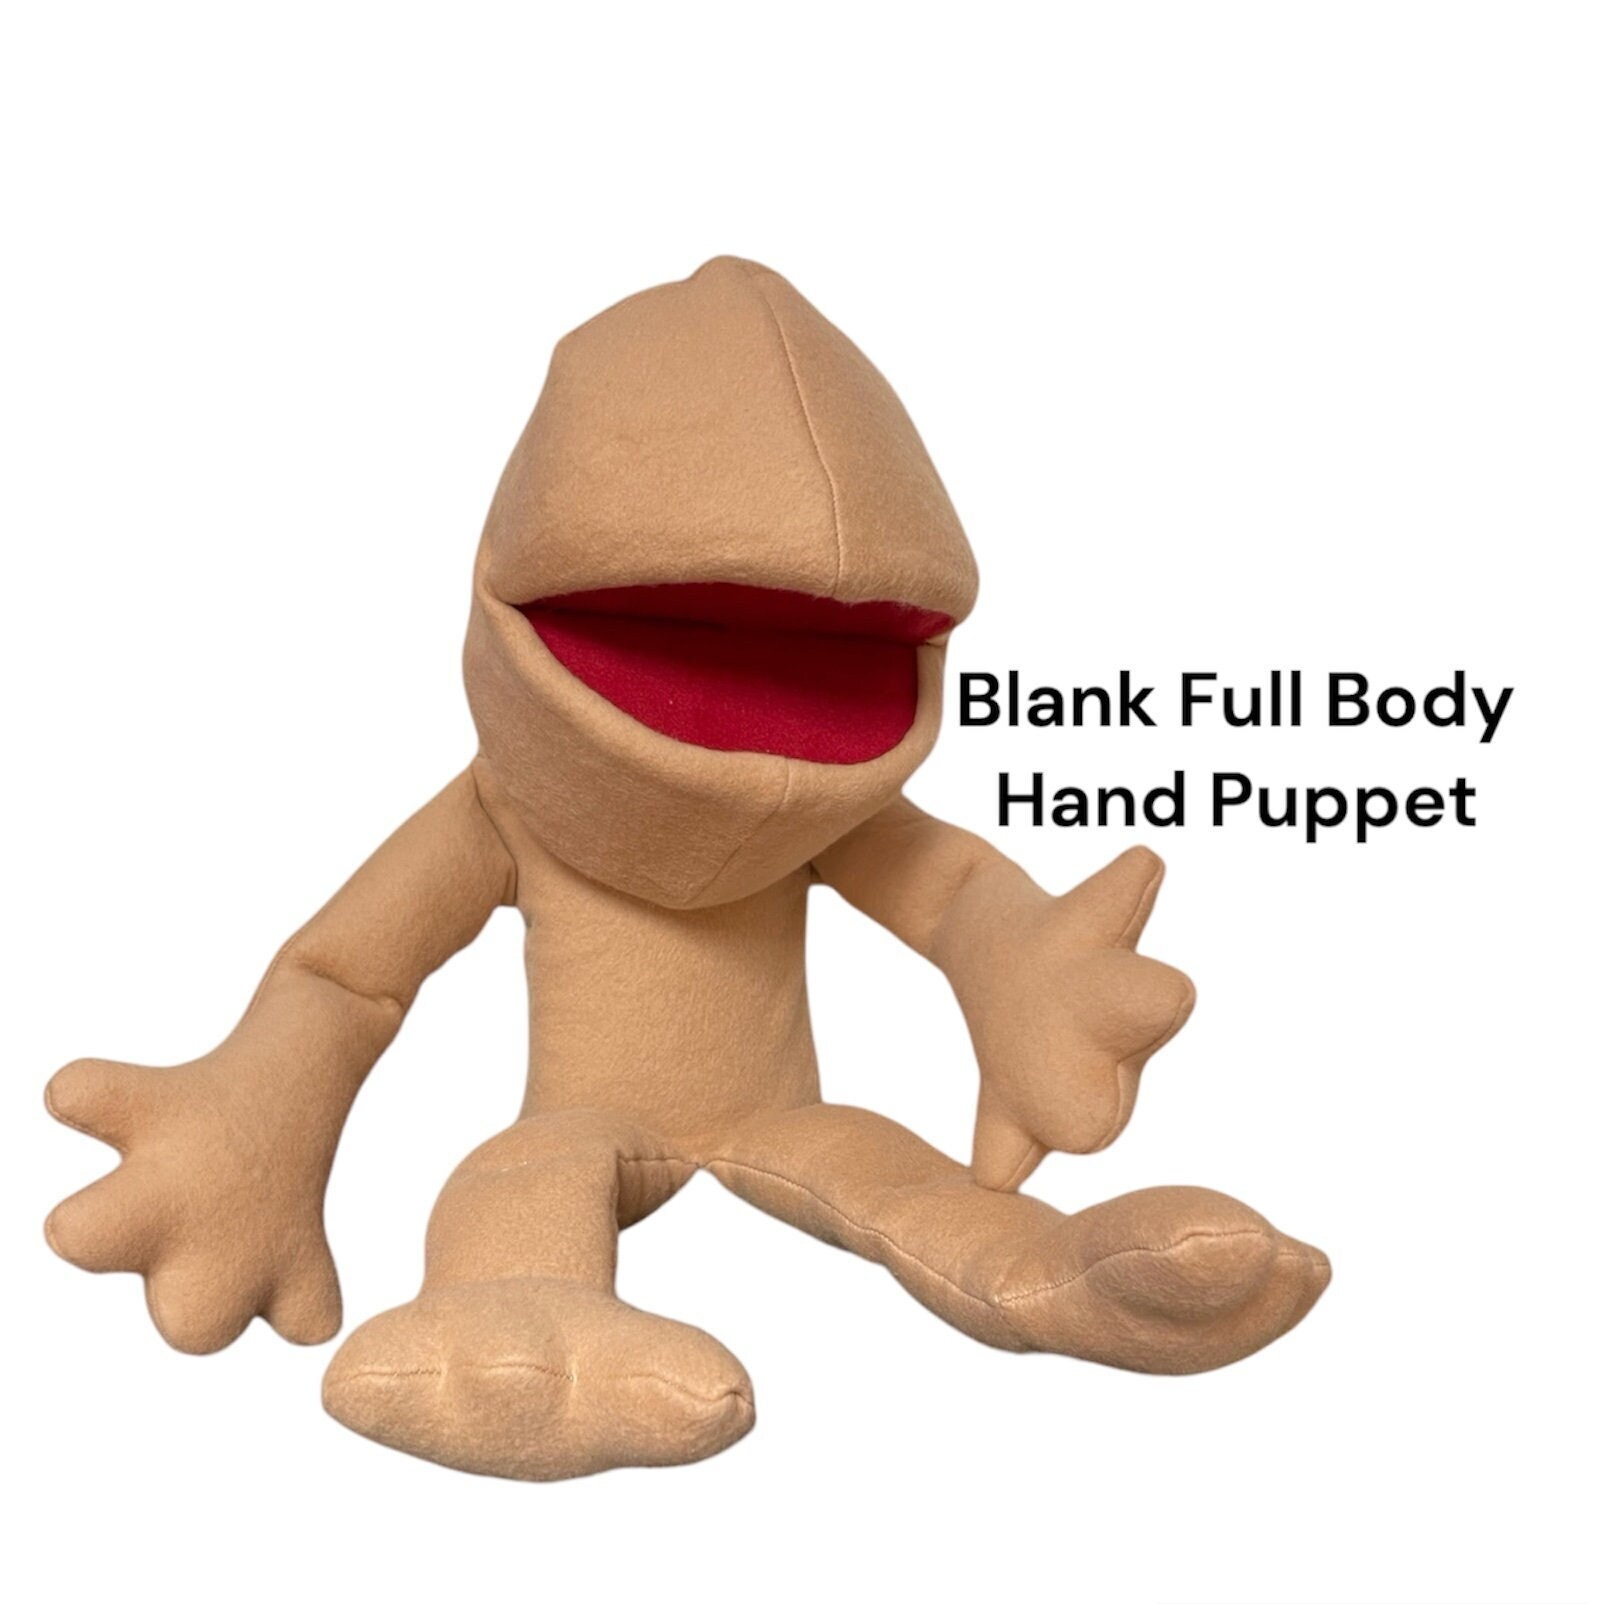 Plushie Puppet Jeffy, Large Hand Puppets